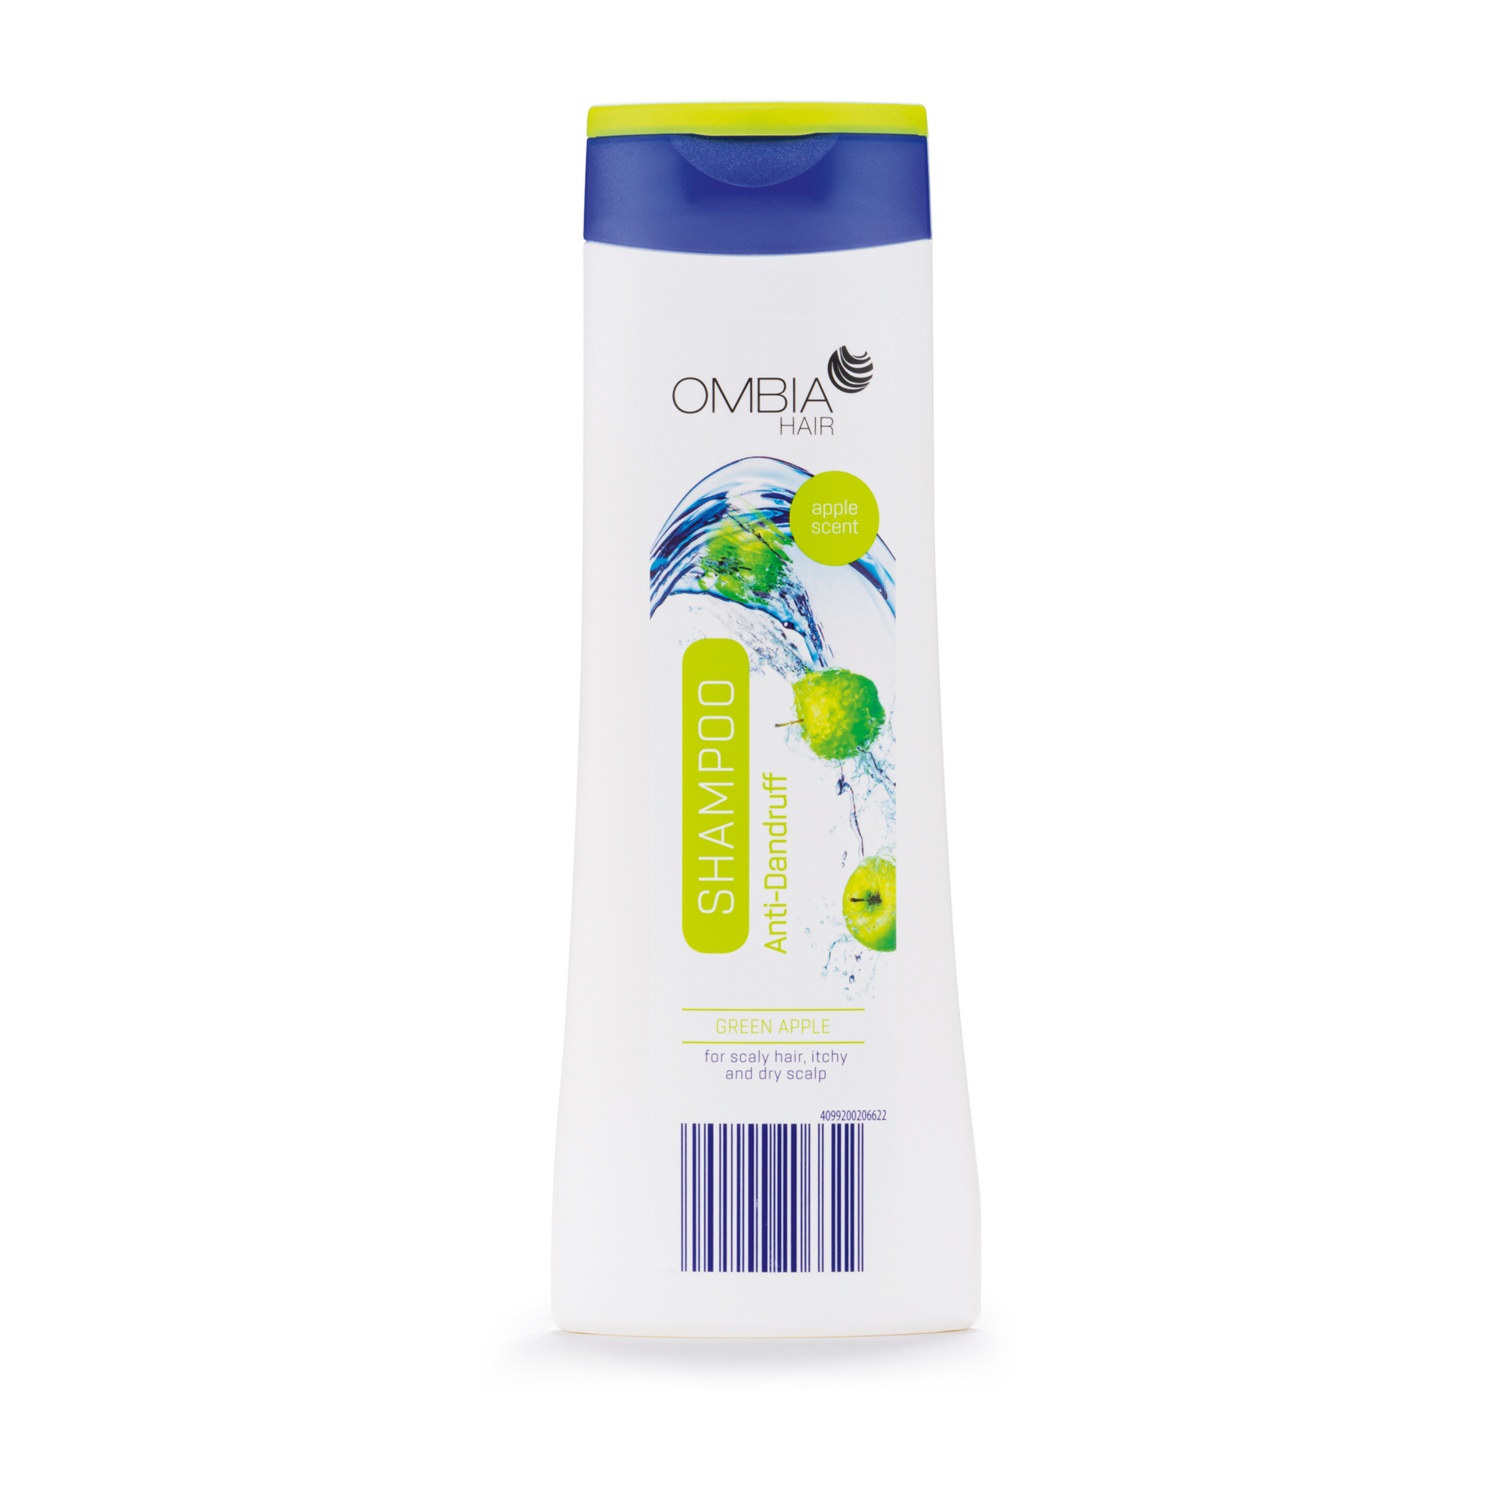 OMBIA HAIR Anti Schuppen Shampoo, Green Apple